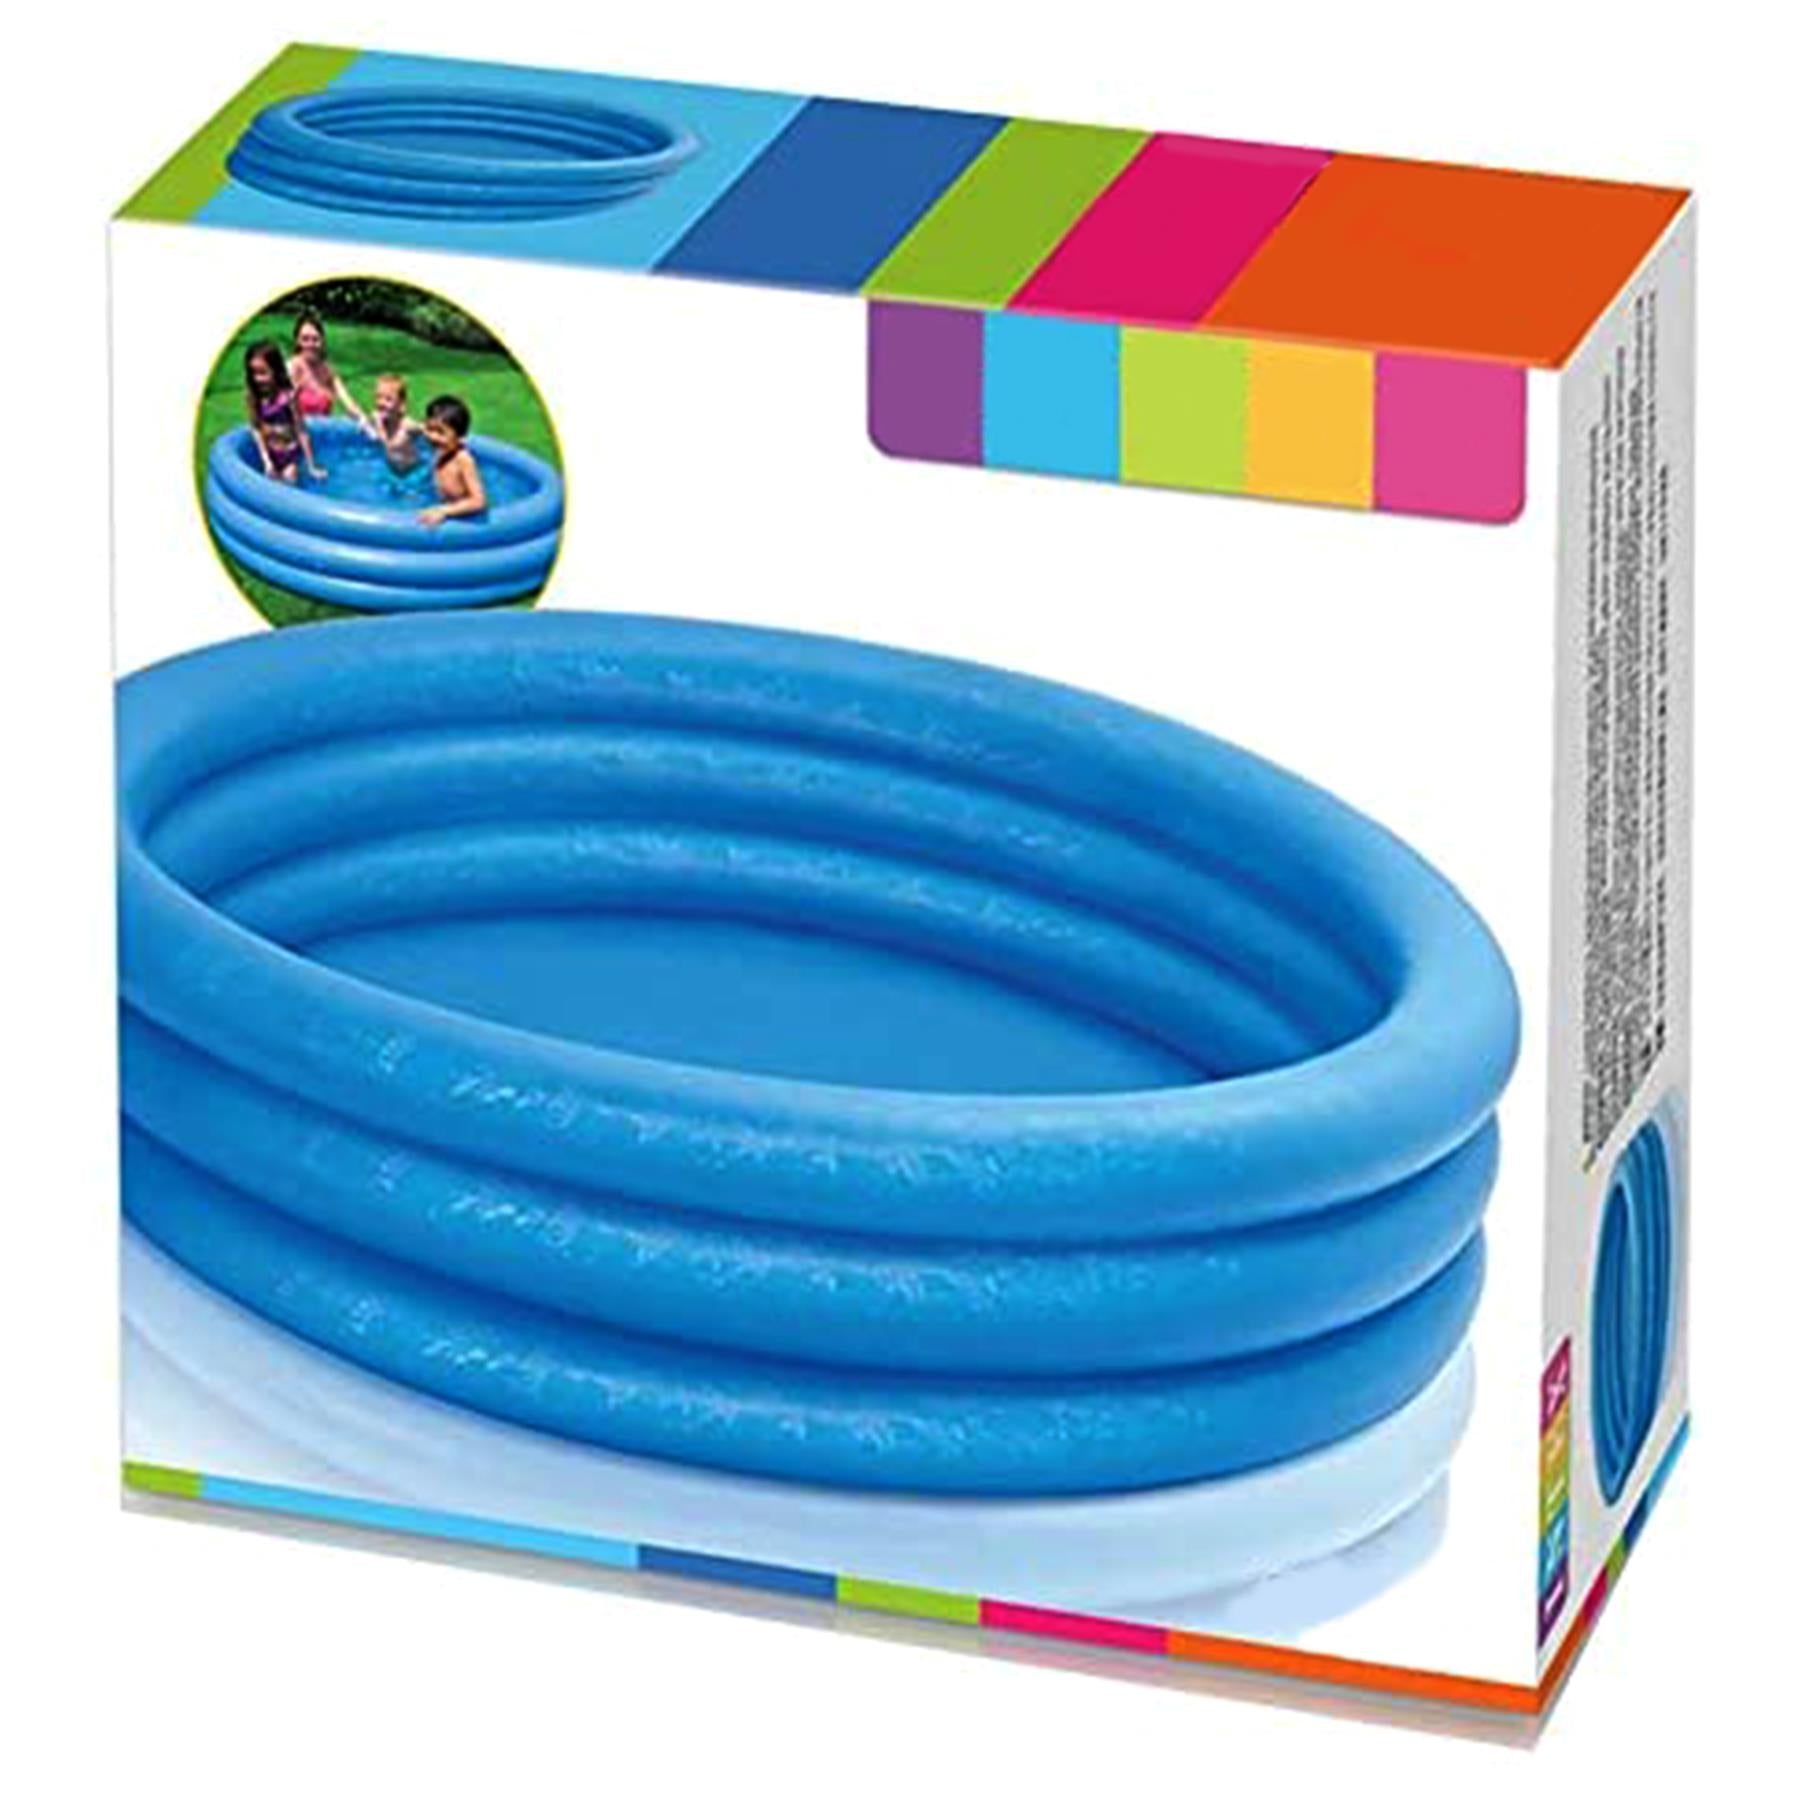 Intex 58" Paddling Pool Intex - The Magic Toy Shop